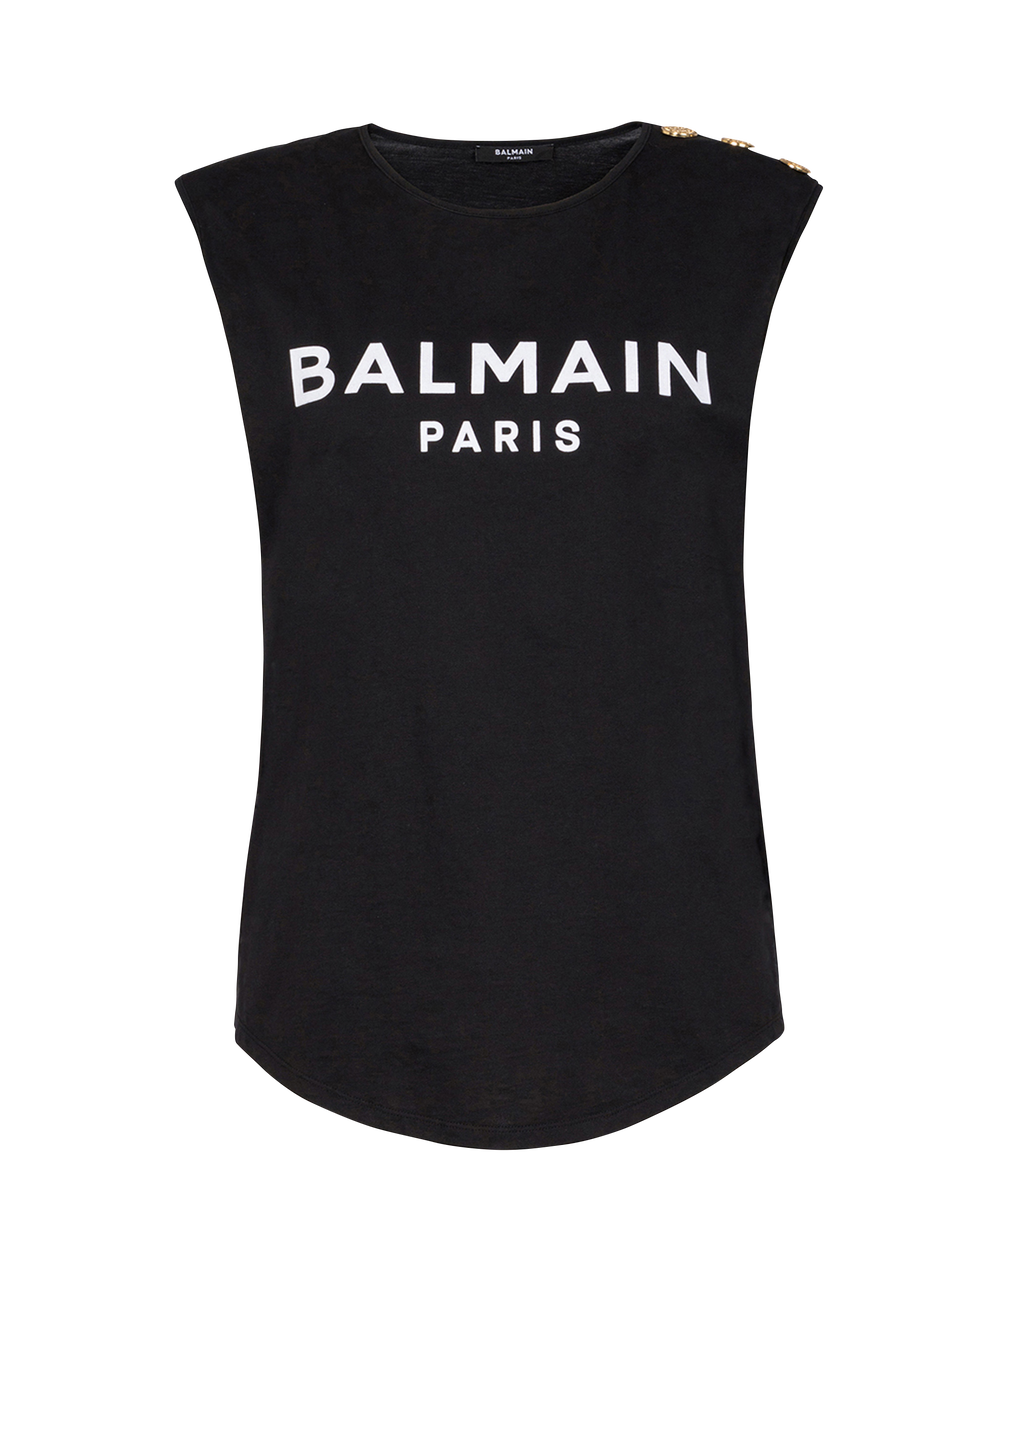 T-shirt en coton imprimé logo Balmain, noir, hi-res